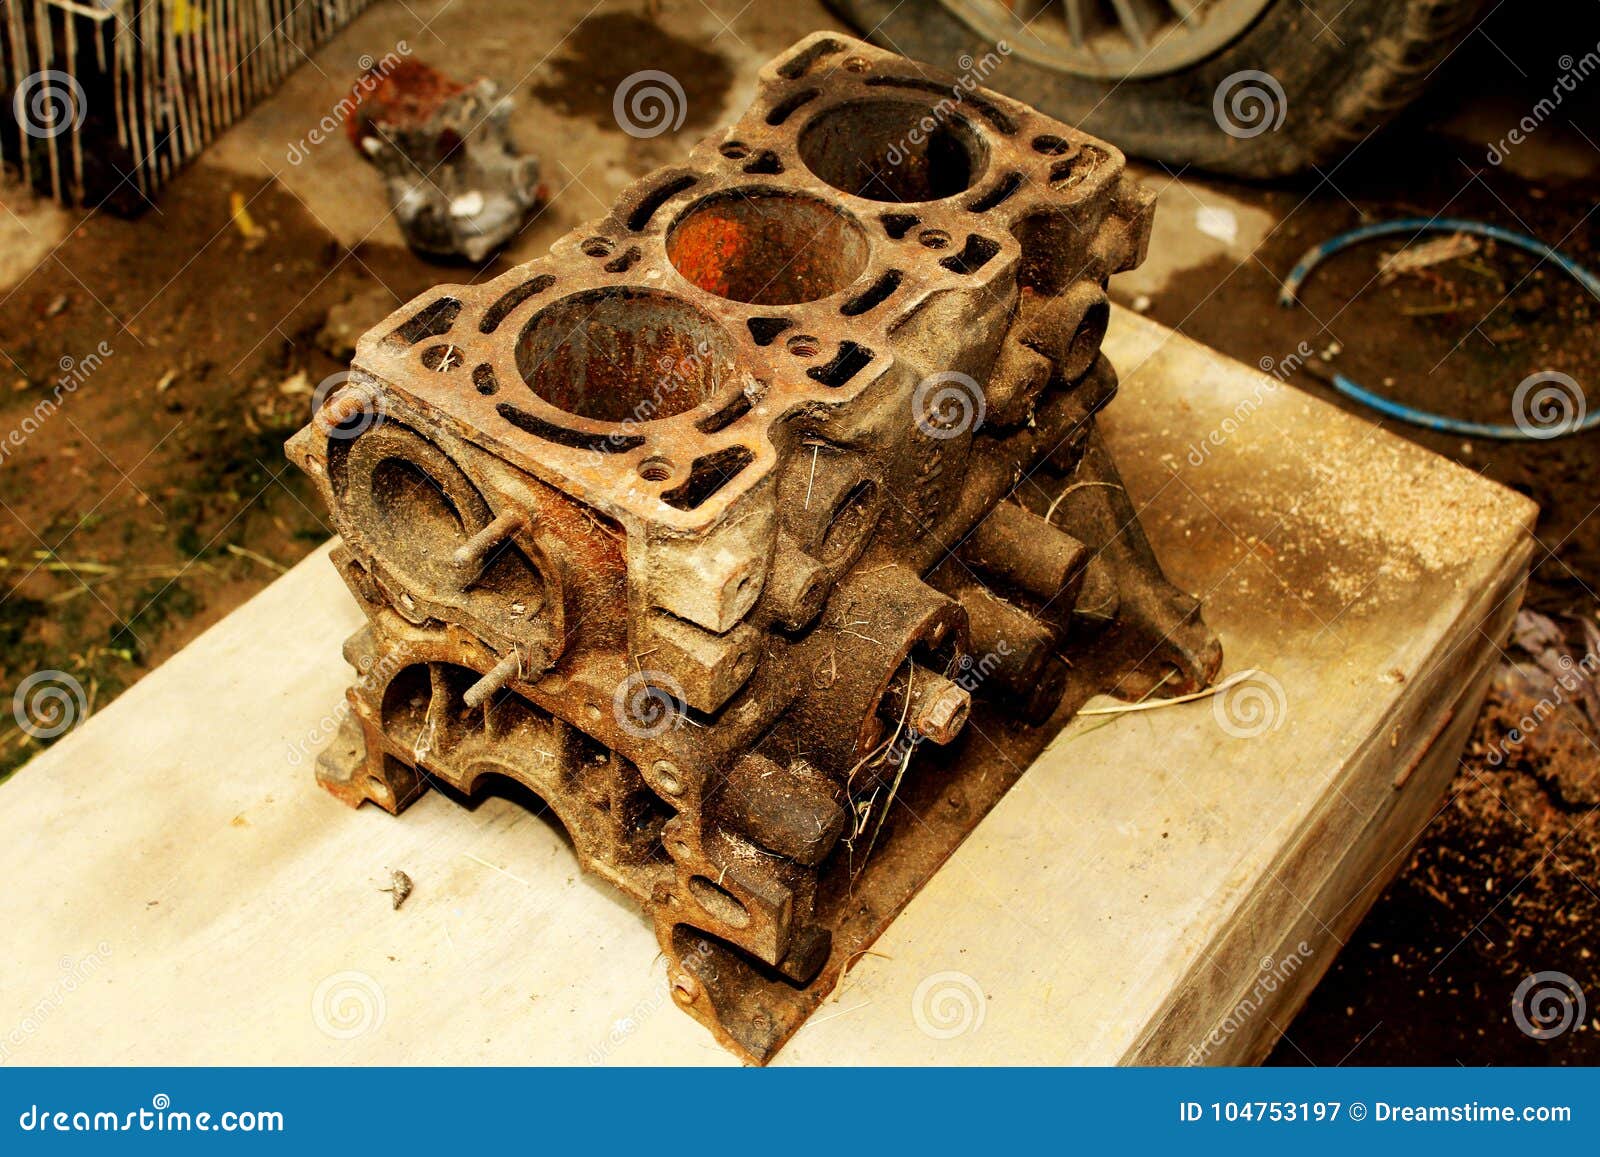 old engine block